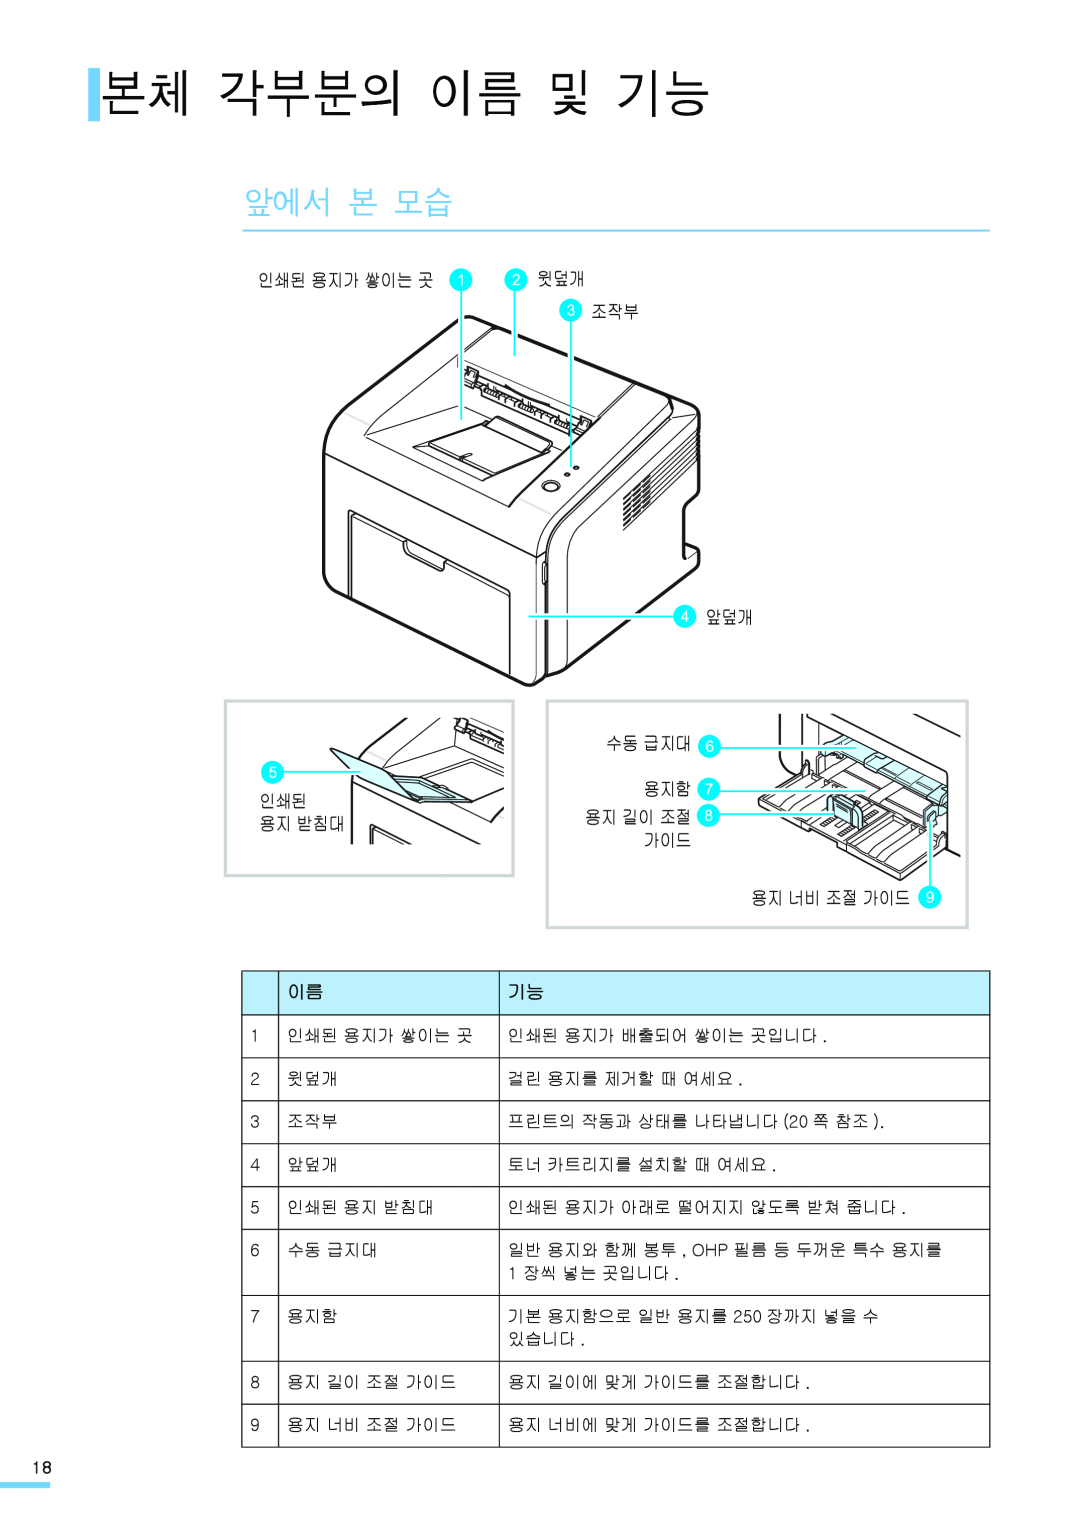 Samsung ML-2571N manual 본체 각부분의 이름 및 기능, 앞에서 본 모습, 인쇄된 용지가 쌓이는 곳, 윗덮개 조작부, 수동 급지대 용지함, 용지 너비 조절 가이드 